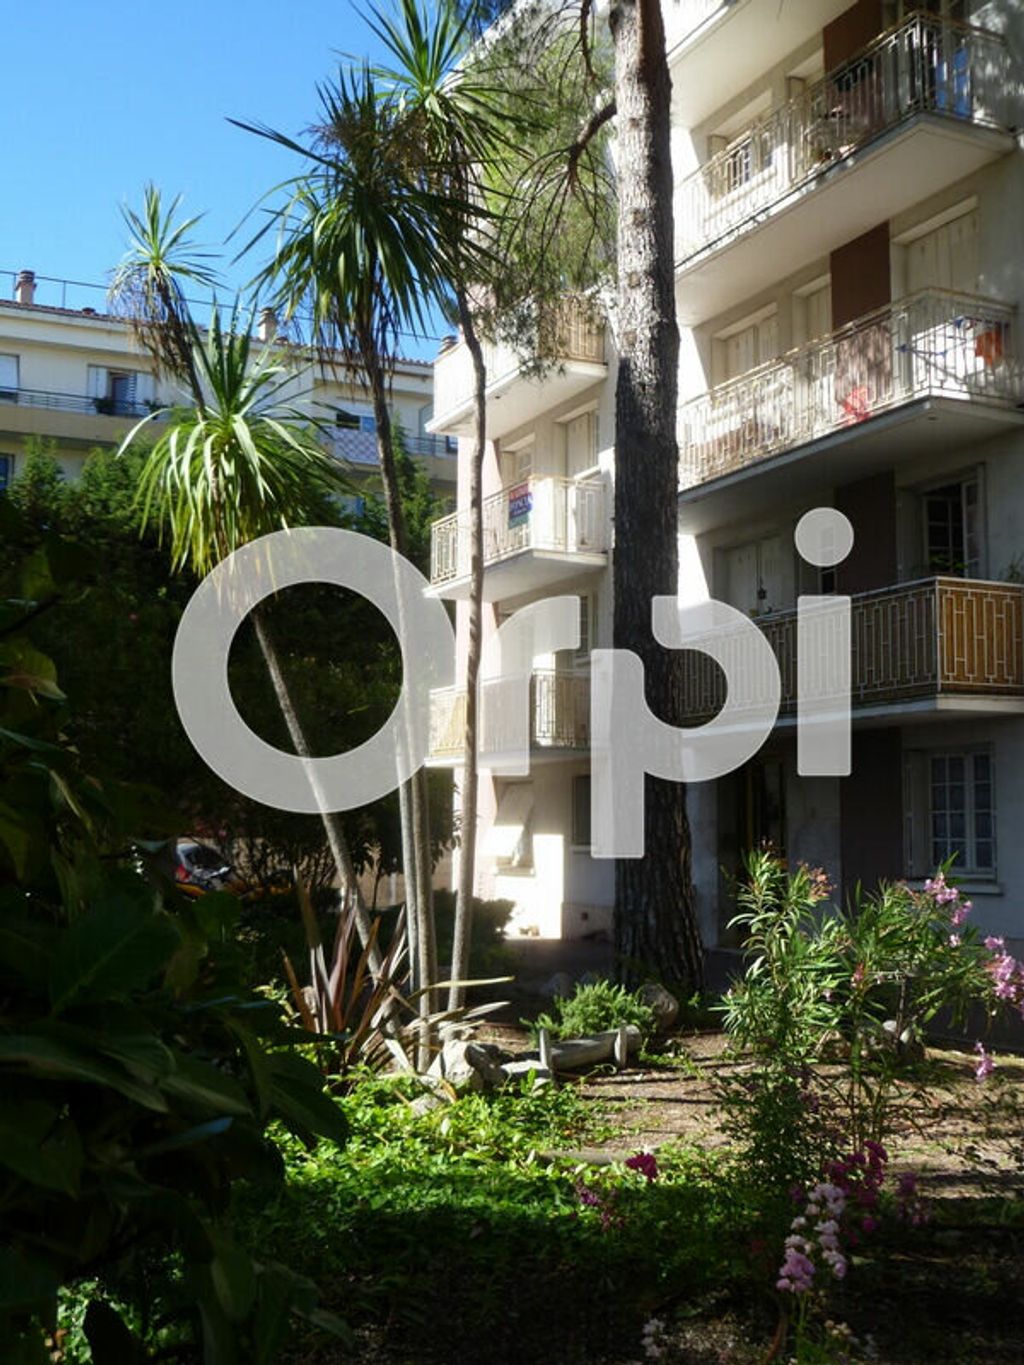 Achat appartement 2 pièces 32 m² - Montpellier